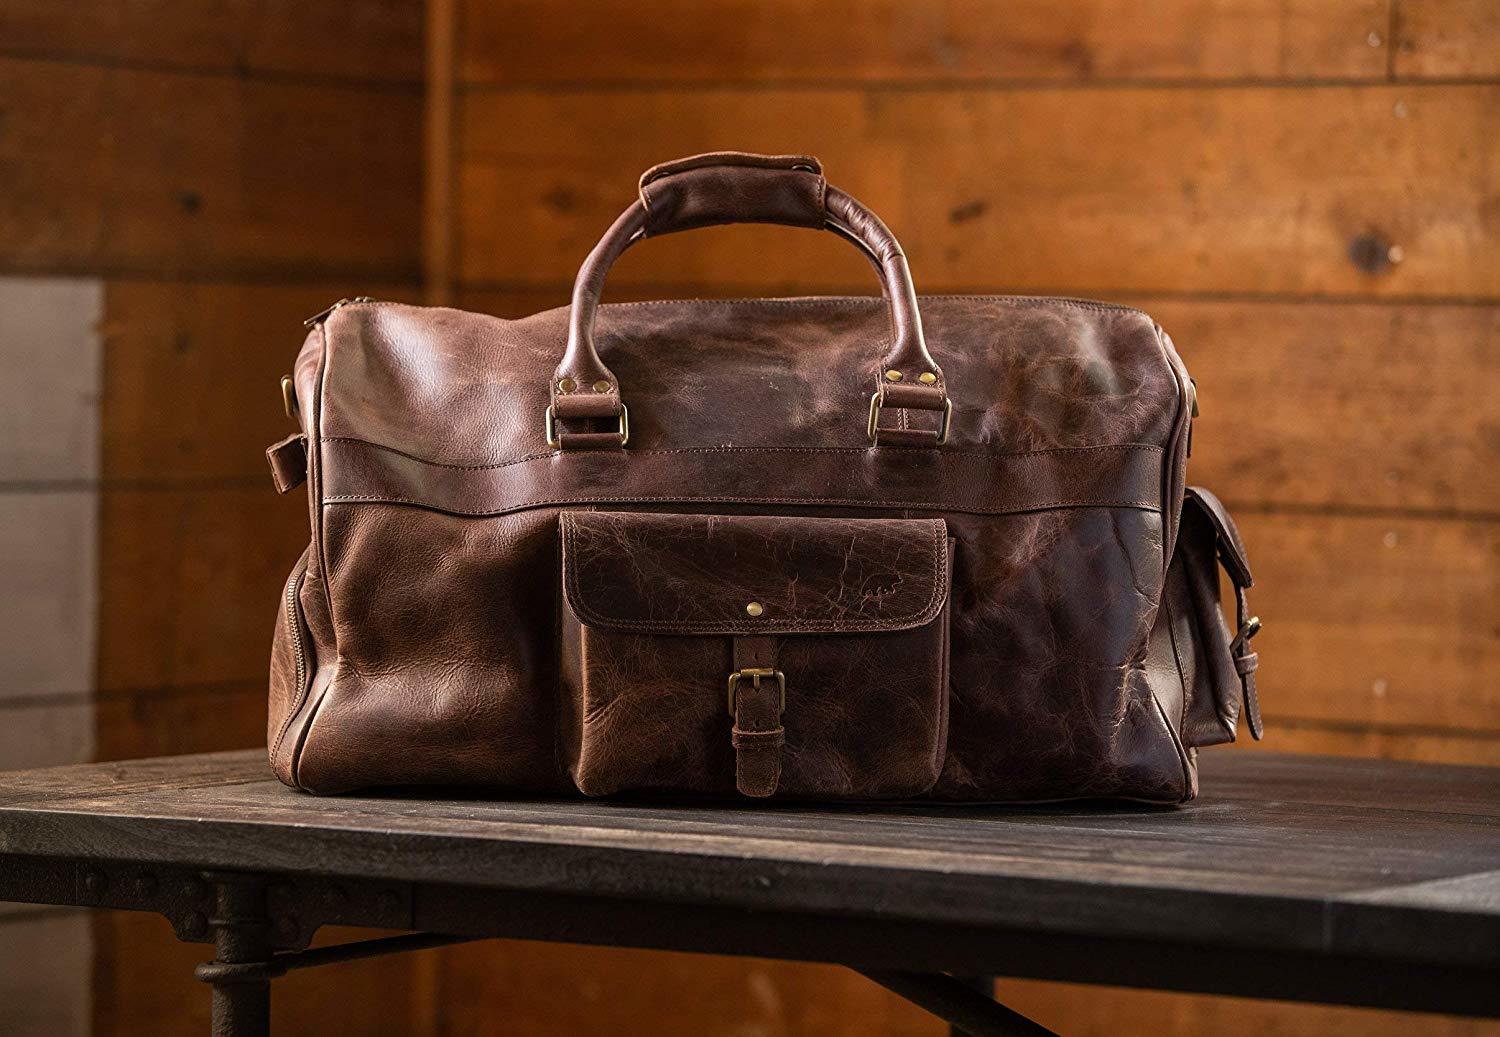 The 10 Best Men's Travel Bags for Short Trips